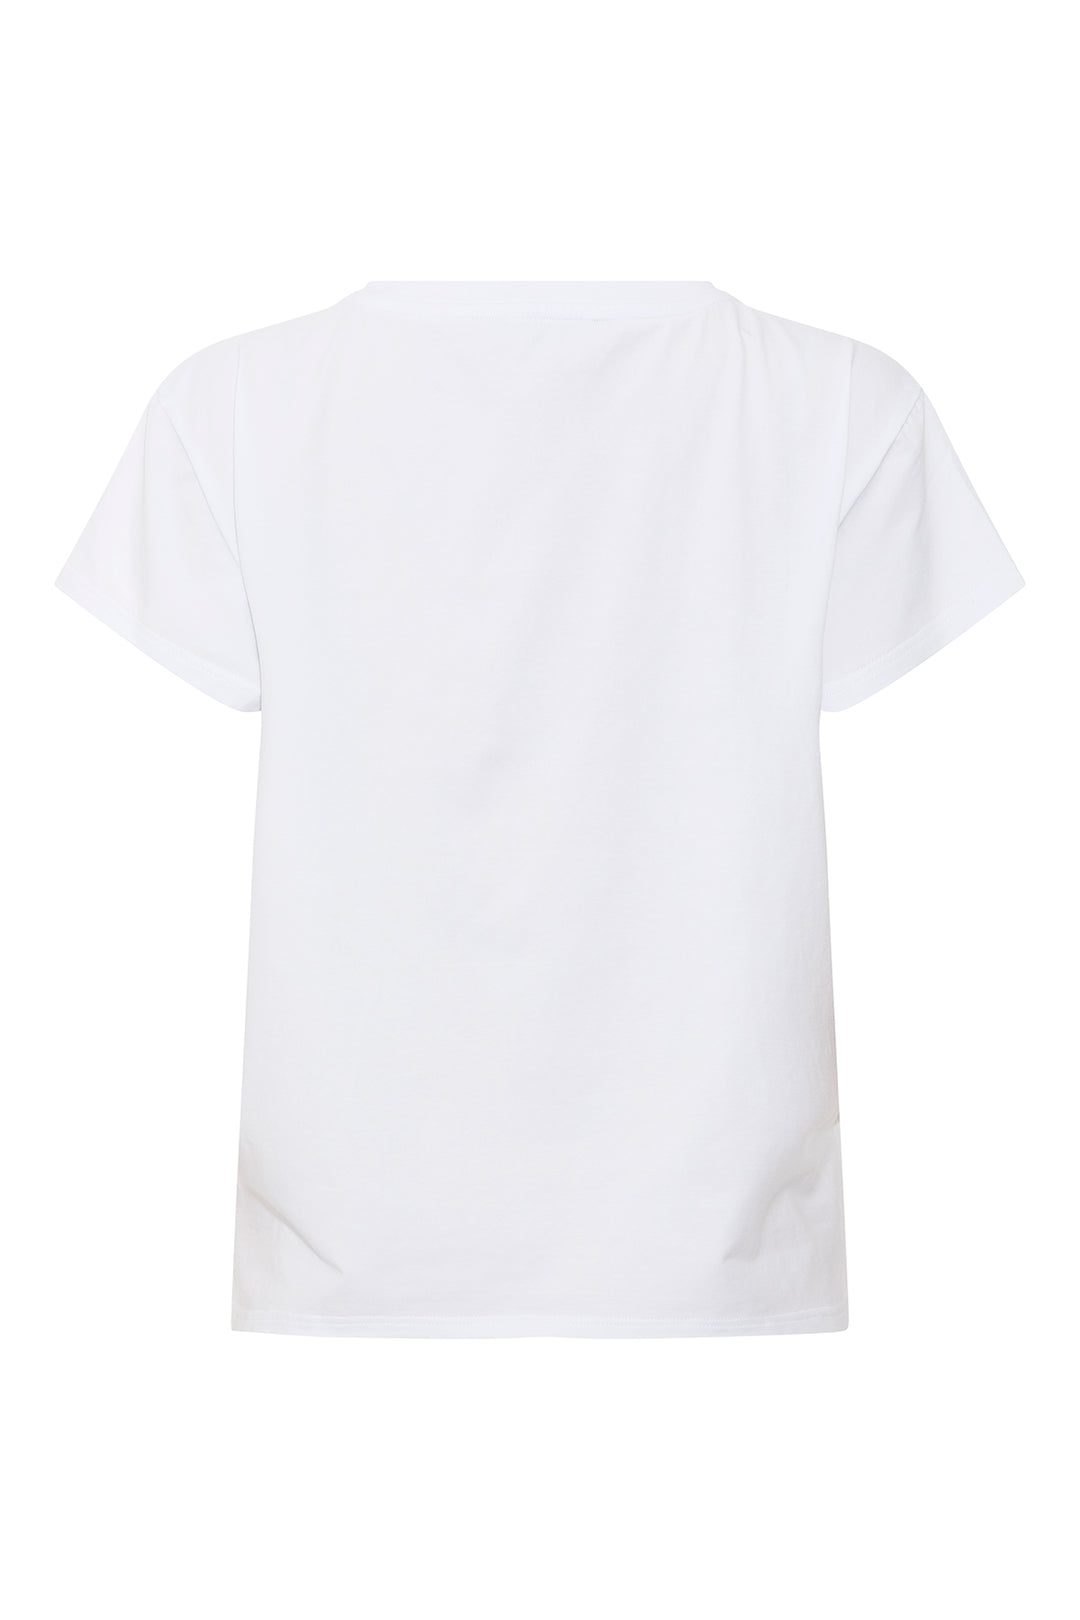 PBO Yes T-shirt T-SHIRTS 01 White